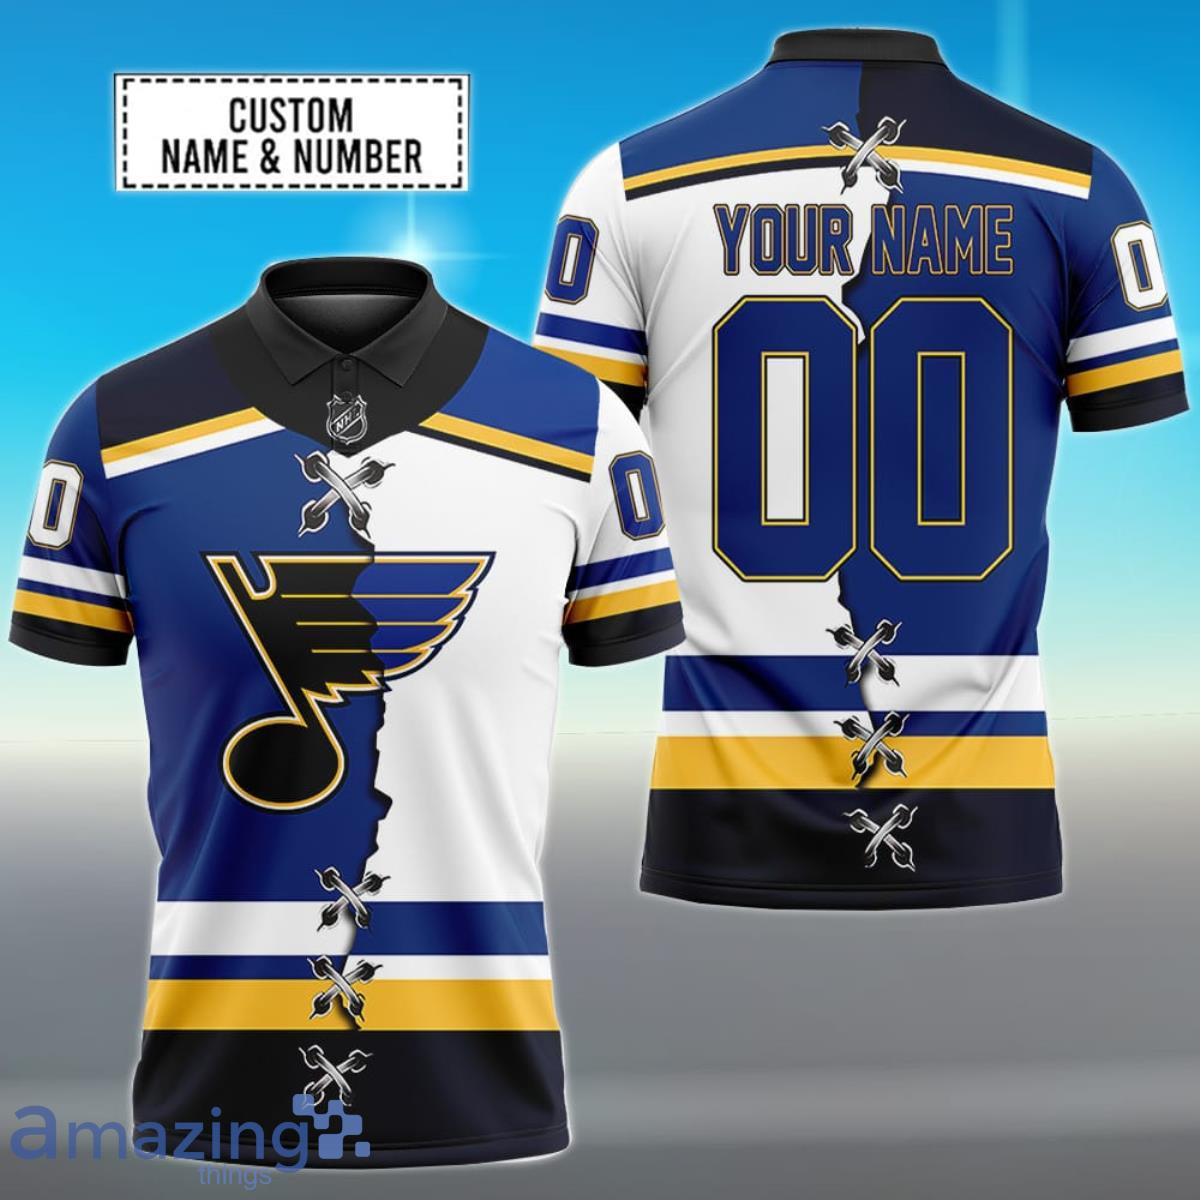 Vintage St Louis Blues Hockey NHL Black Graphic T-Shirt Adult Size 2XL -  beyond exchange